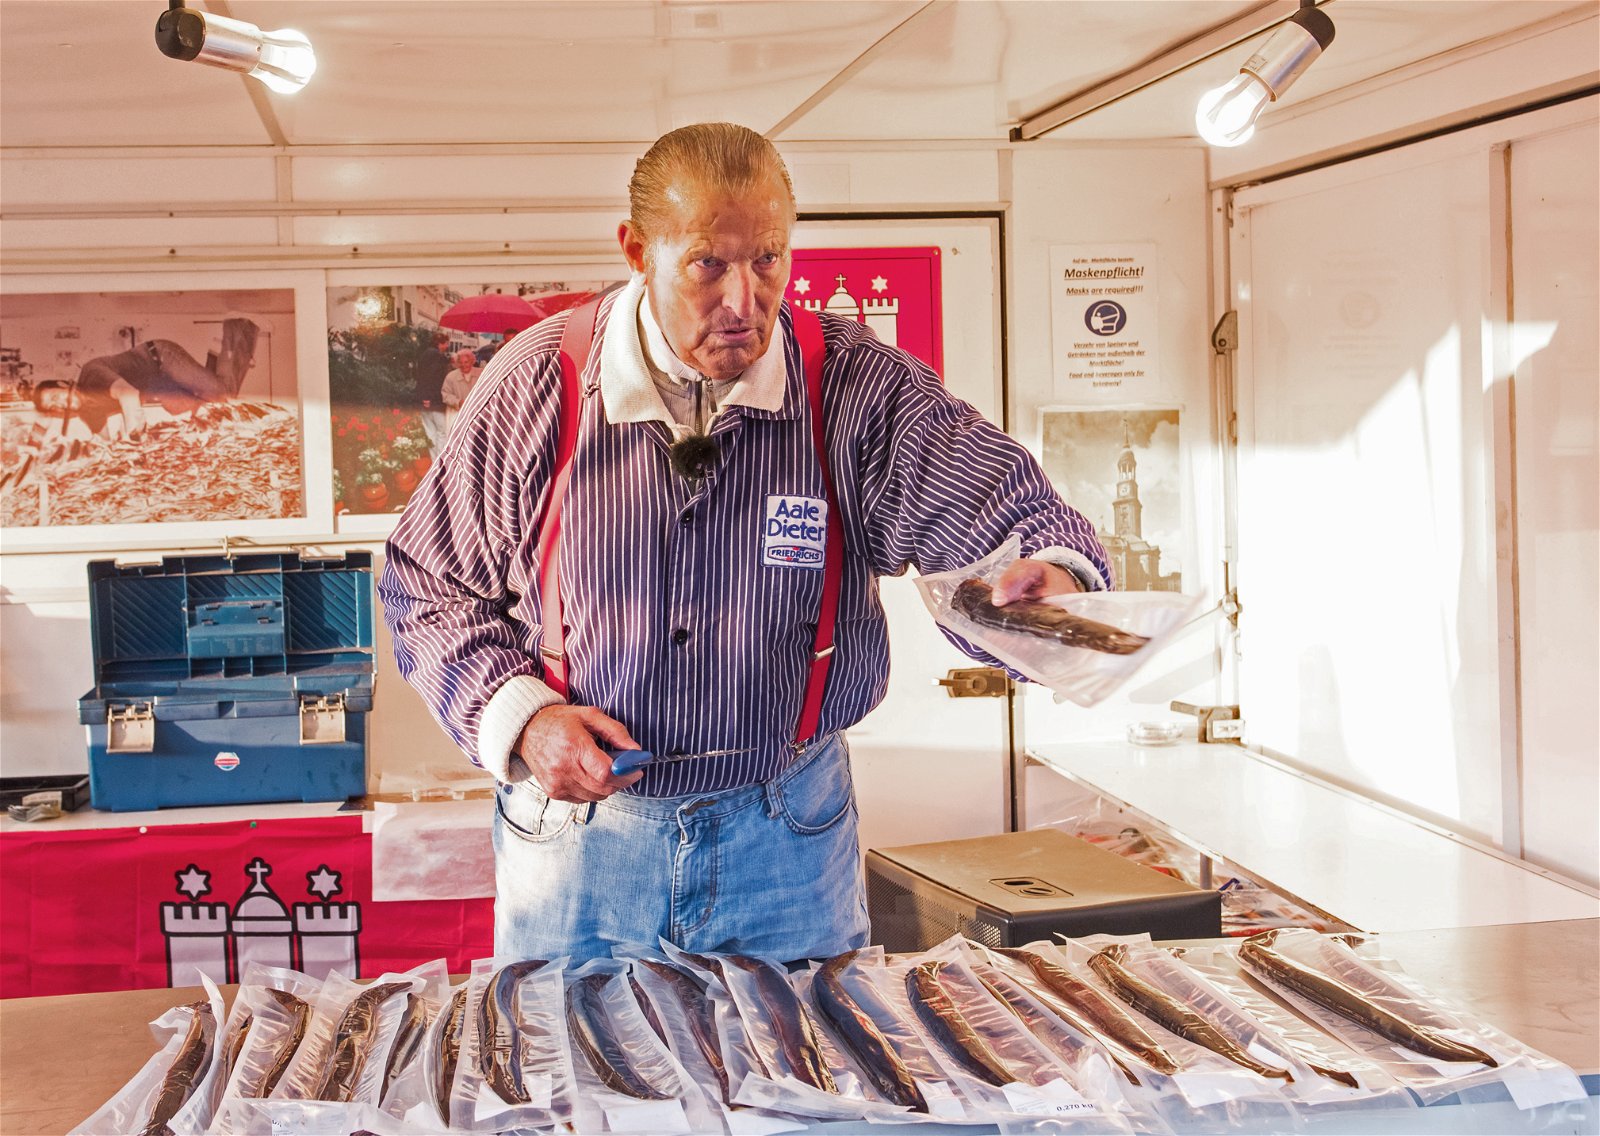 Endangered European eels continue to appear in large numbers on global menus